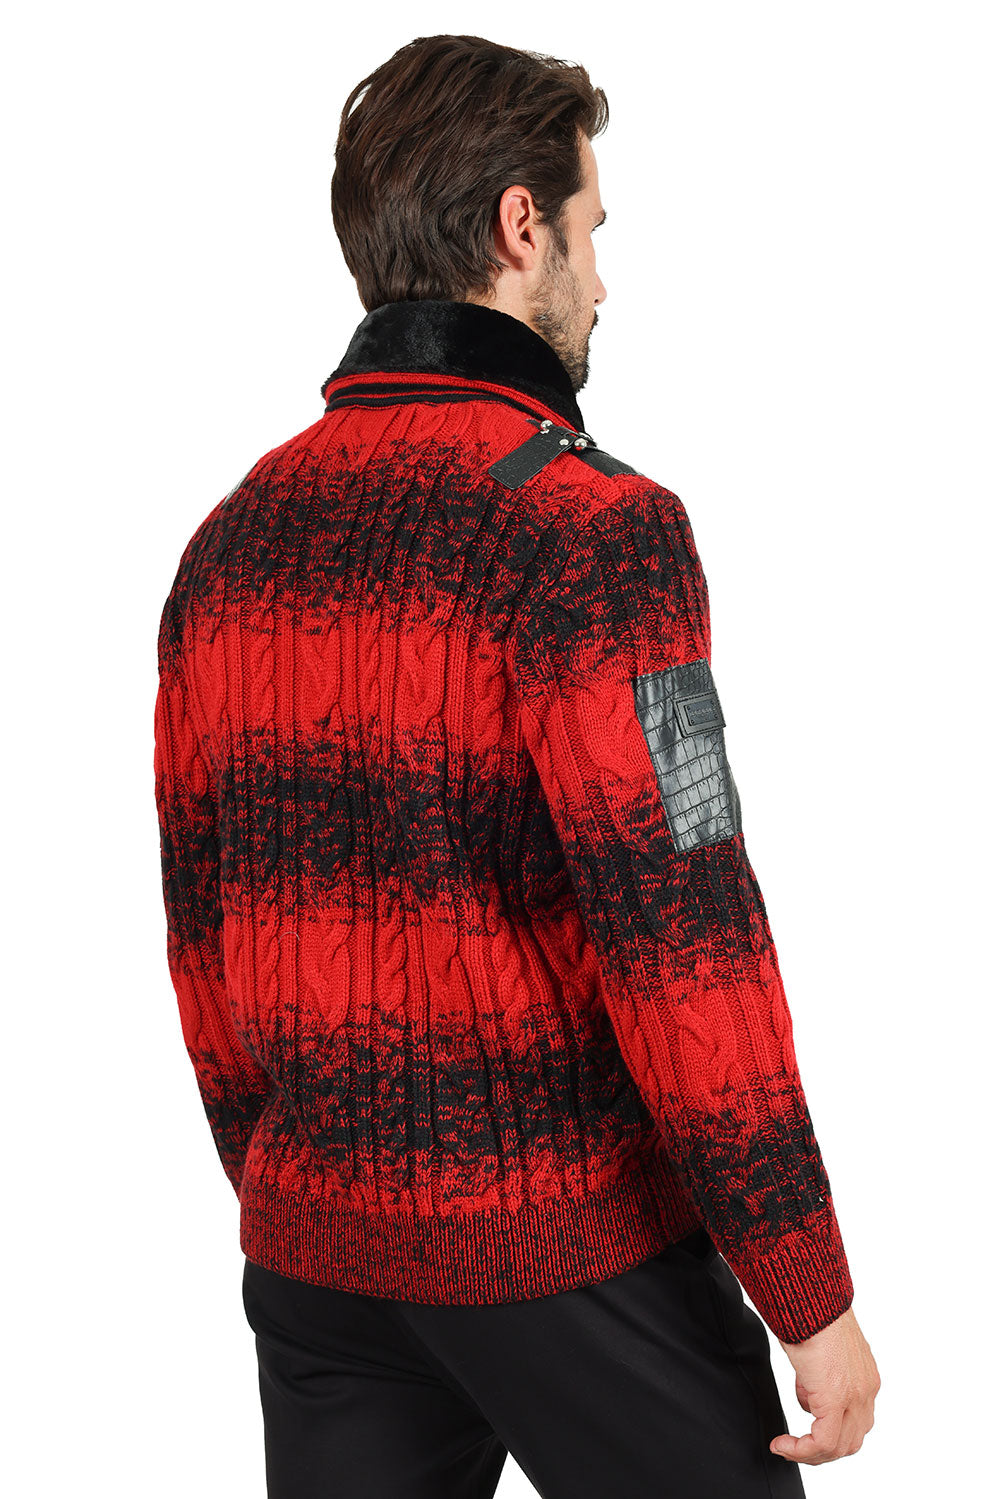 Barabas Men's Zipper Stand collar Animal Print Winter Jacket 2SWZ1 Red